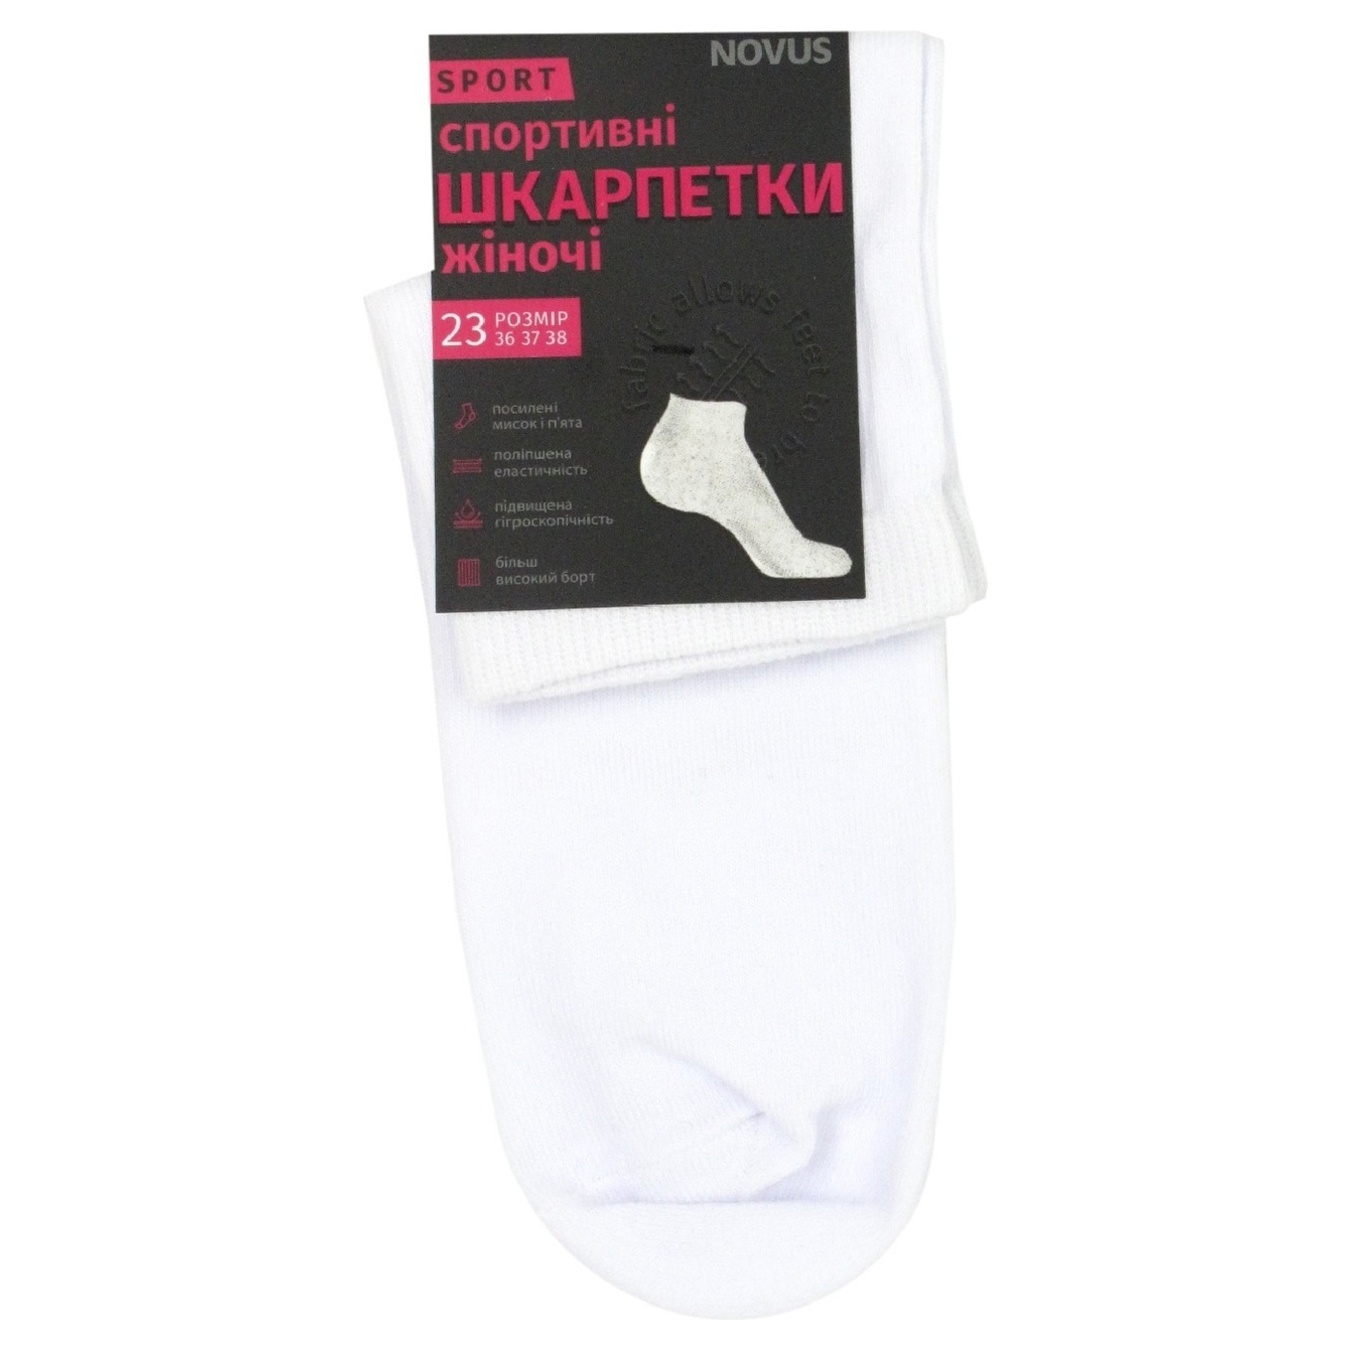 Women's socks NOVUS demi-season medium white size 23